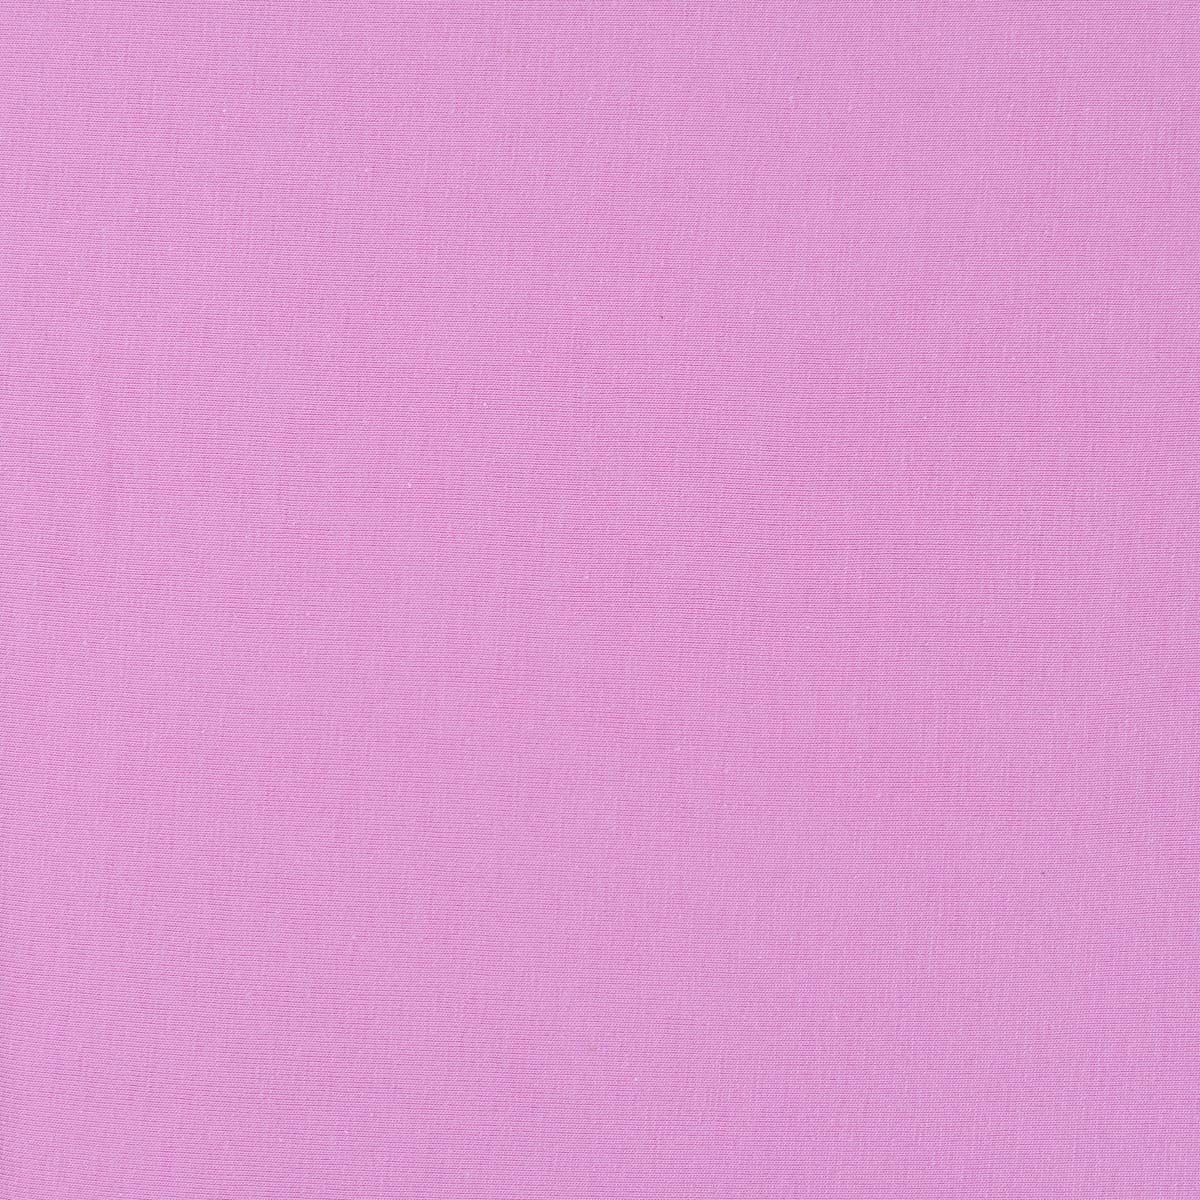 Простыня натяжная 2-спальная Pappel 180x220см, цвет розовый Pappel 180220-35/Pink 11 180220-35/Pink 11 - фото 2